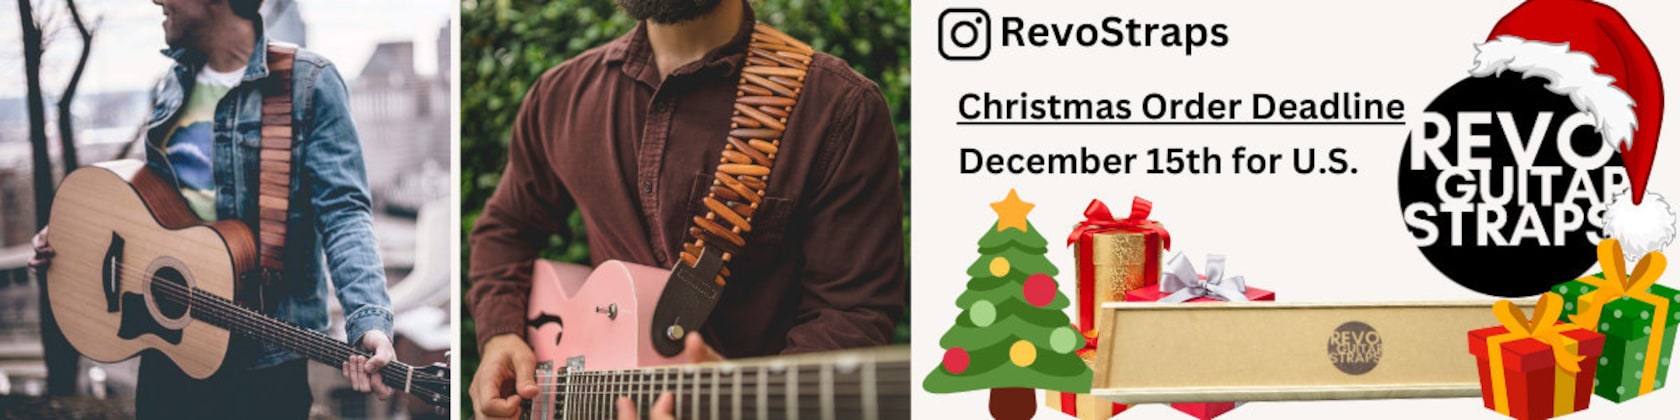 Rosewood Revo Guitar Strap – Revo Guitar Straps